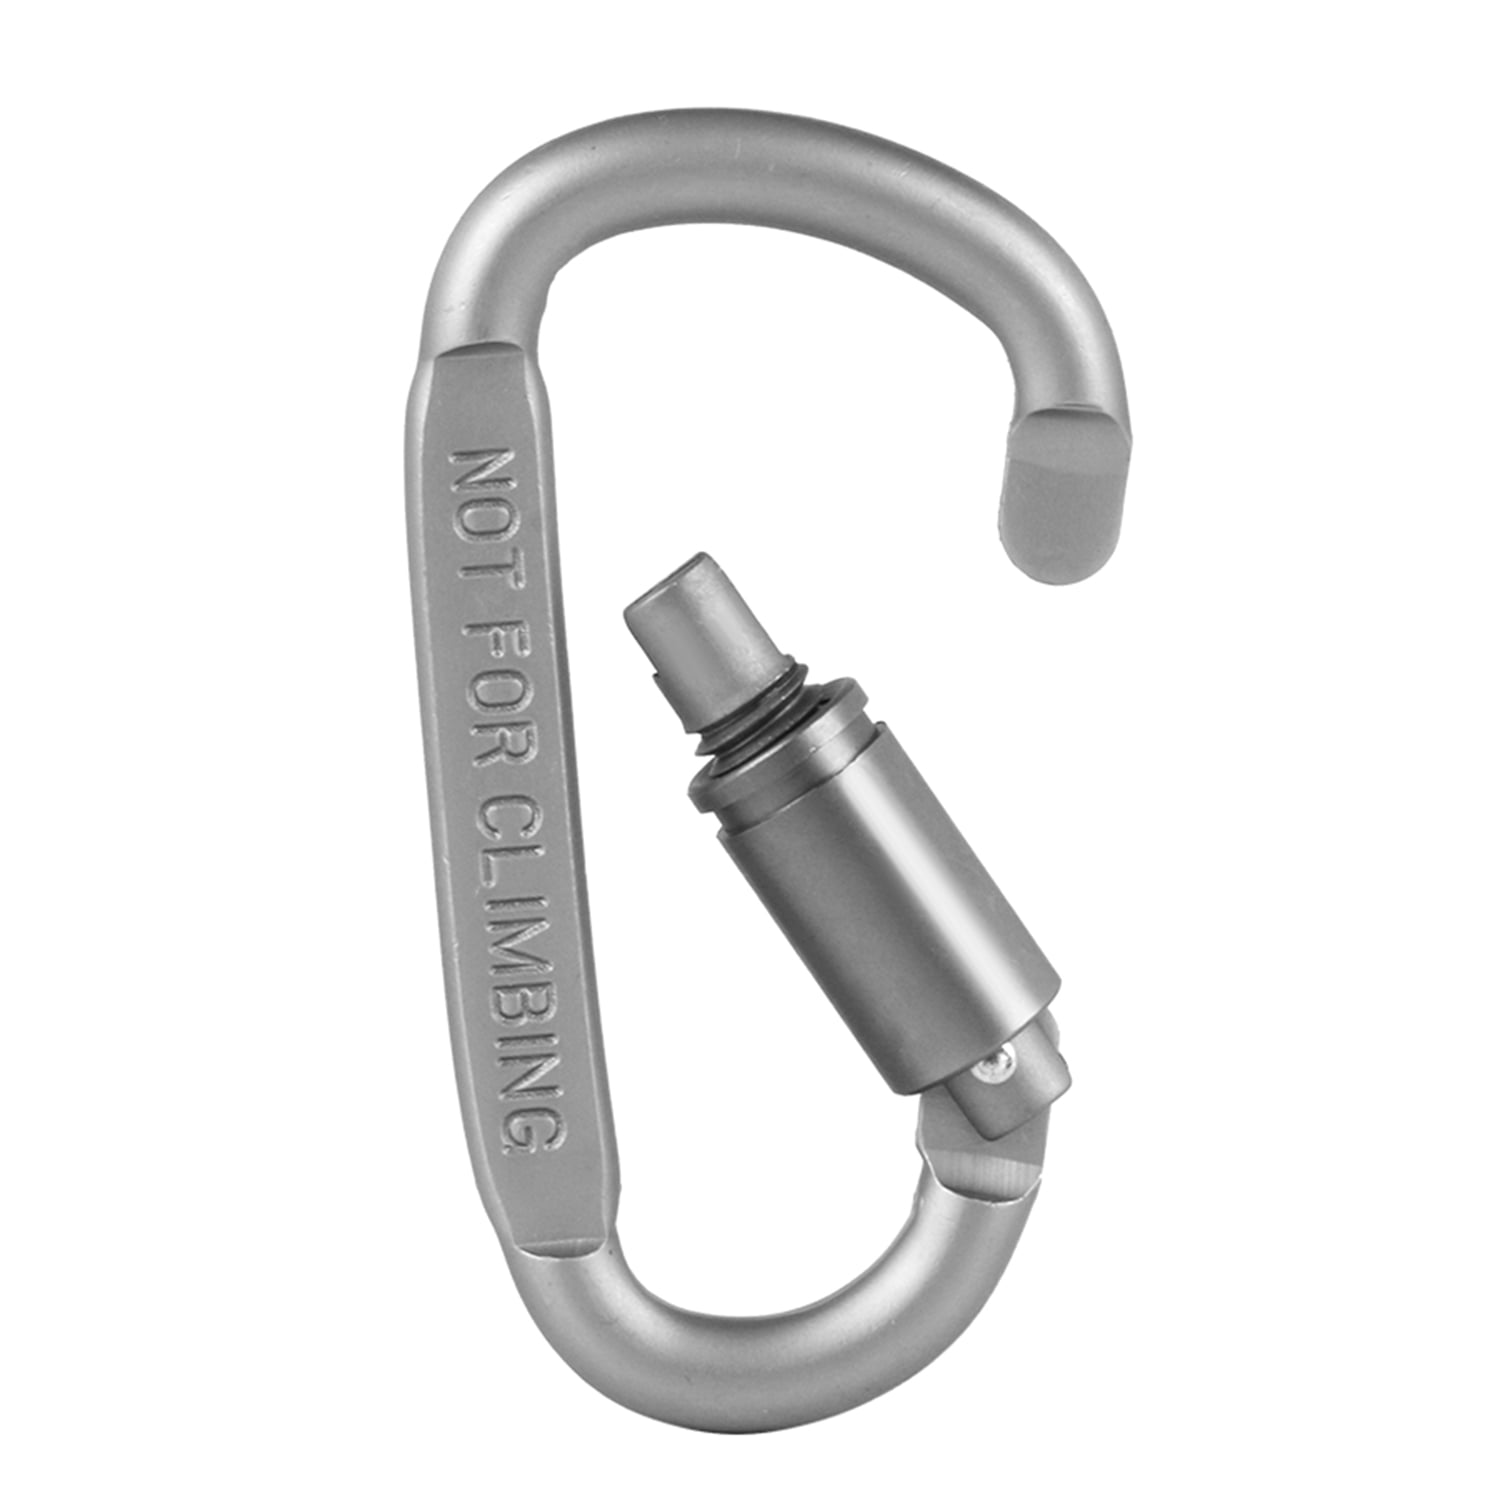 Sturme Carabiner Clip Aluminum D-ring Locking Durable Strong Light Large 9pk Set for sale online 